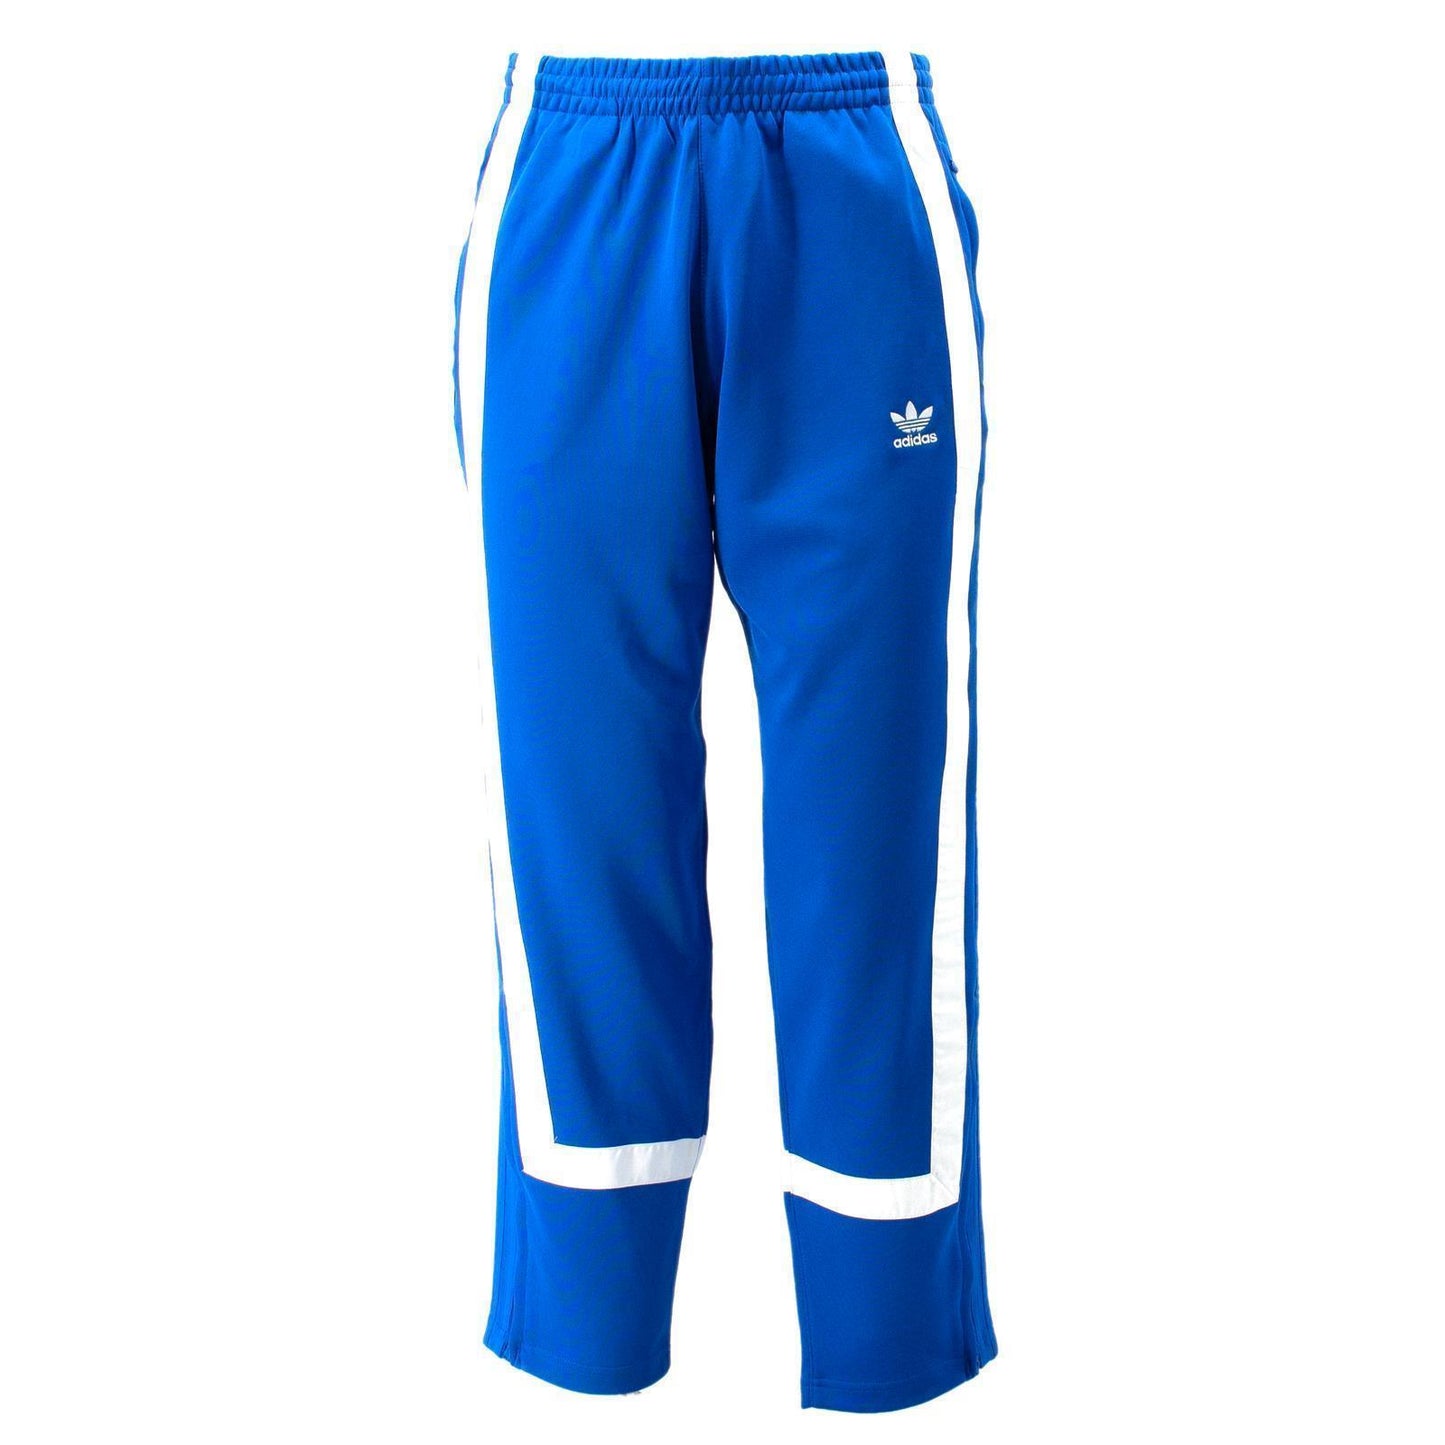 Adidas Originals Trefoil Warmup Track Pants Trainingshose Herren blau GK0649